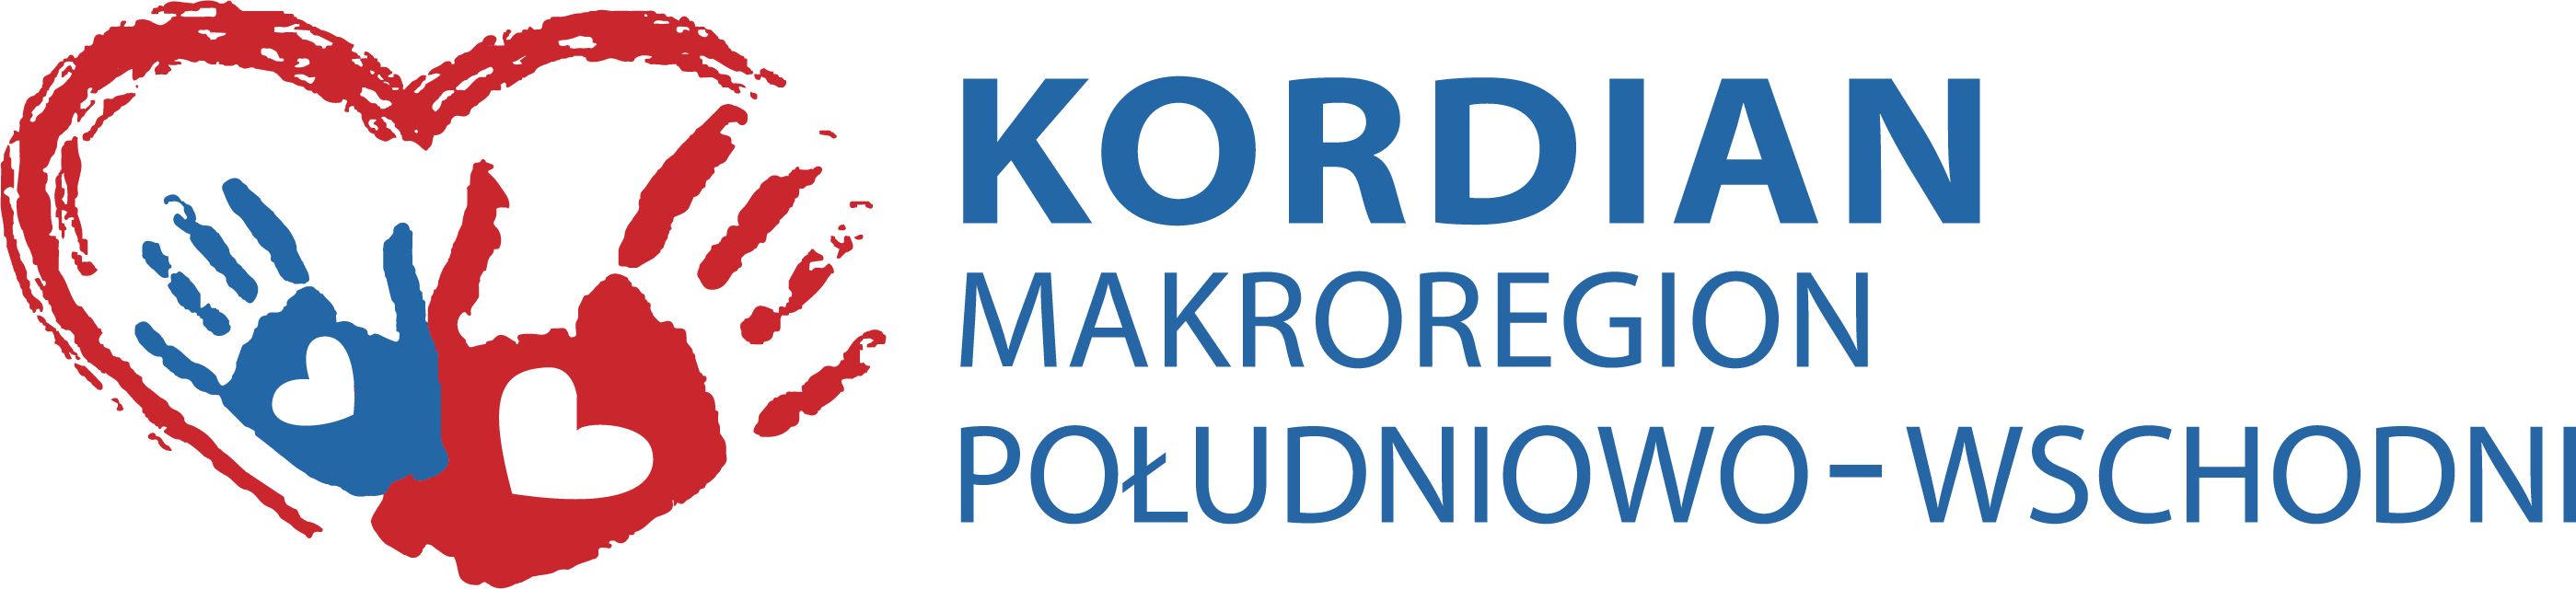 logo Kordian Kopia